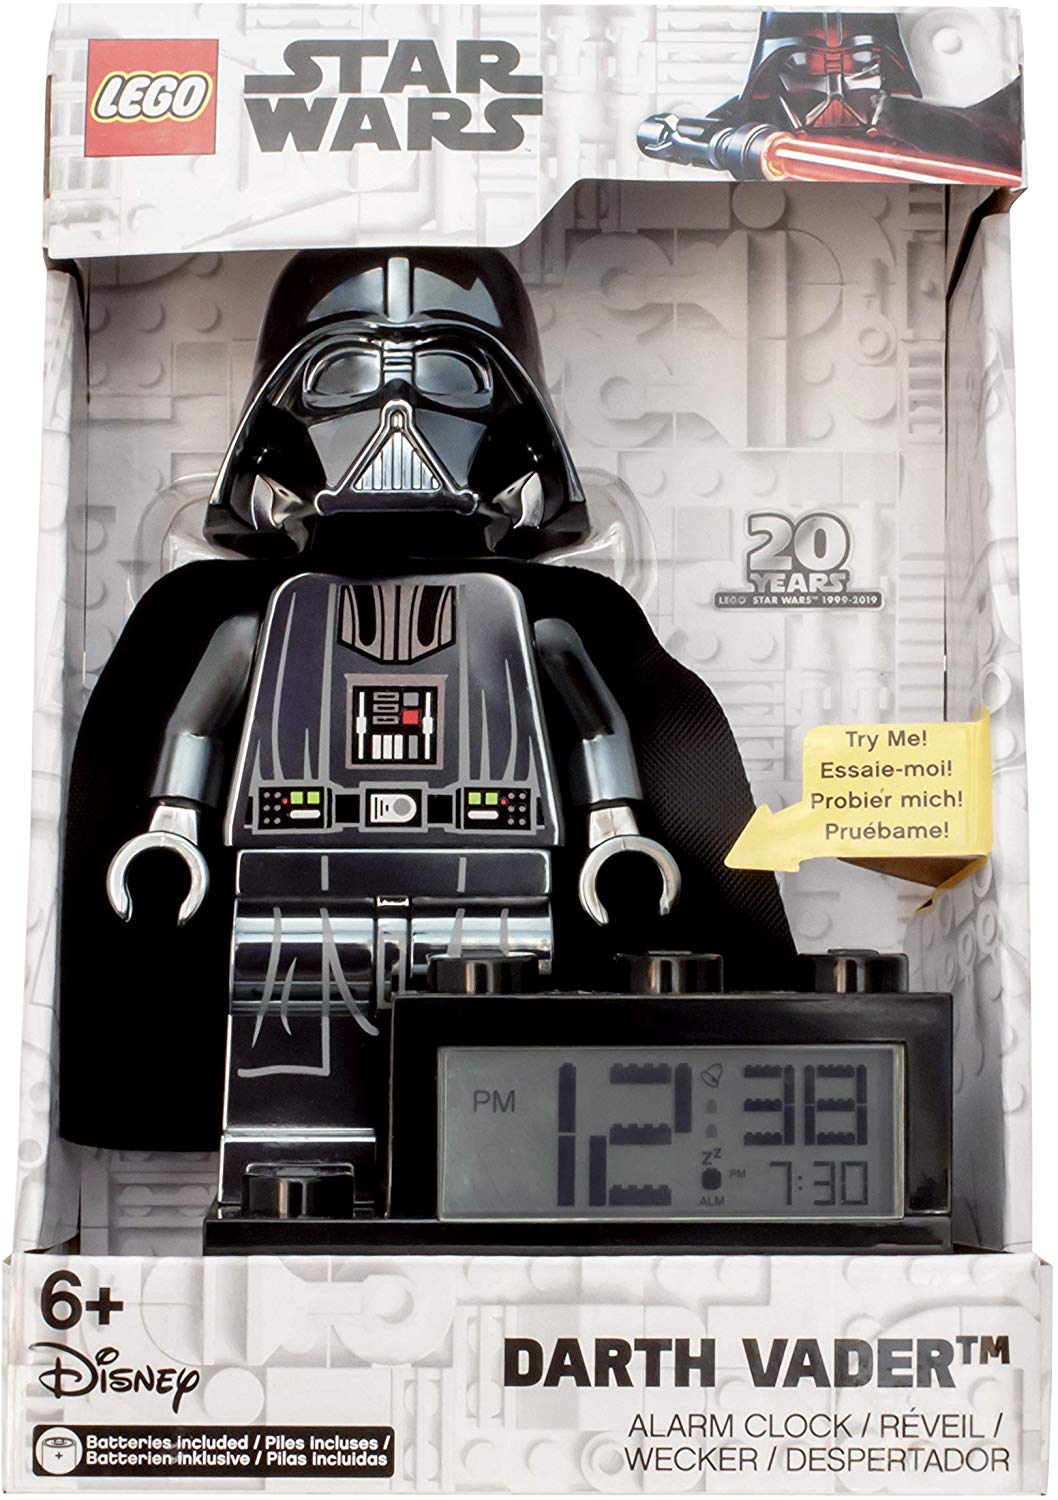 NIB LEGO Star Wars Darth Vader Bust 75227 2019 20 Years Celebration EXCLUSIVE 